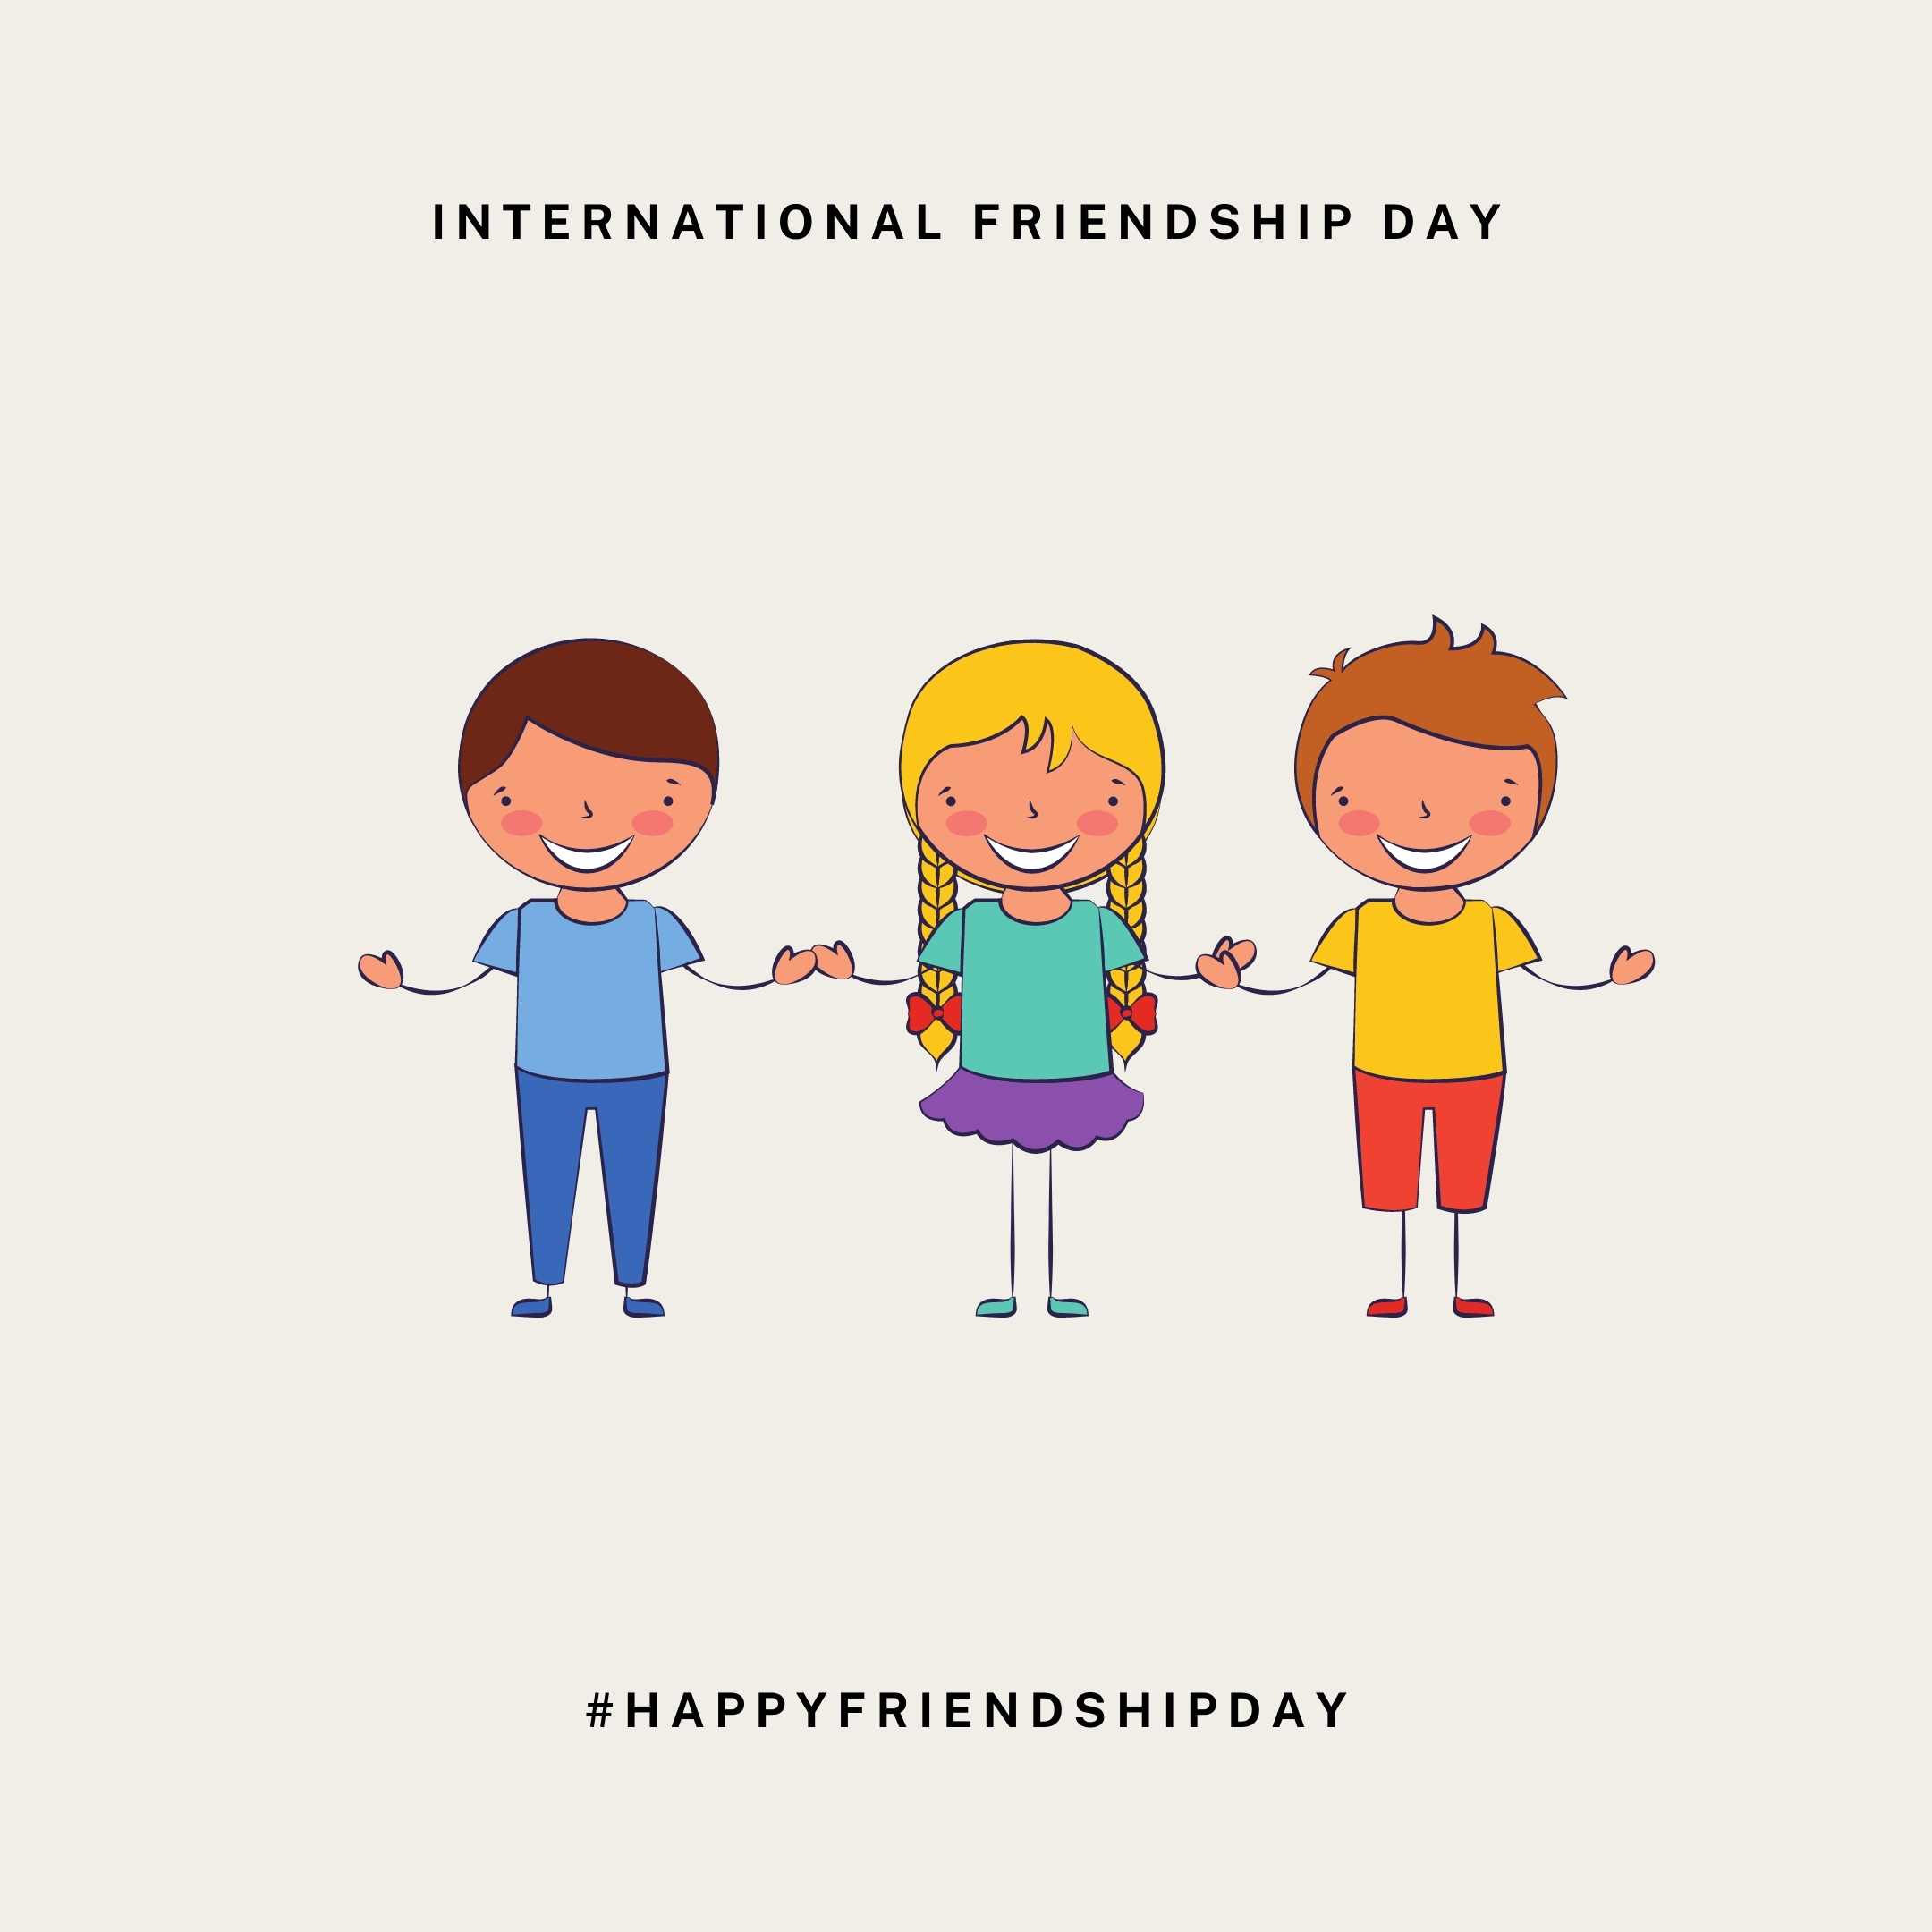 Happy Friendship Day Instagram Images